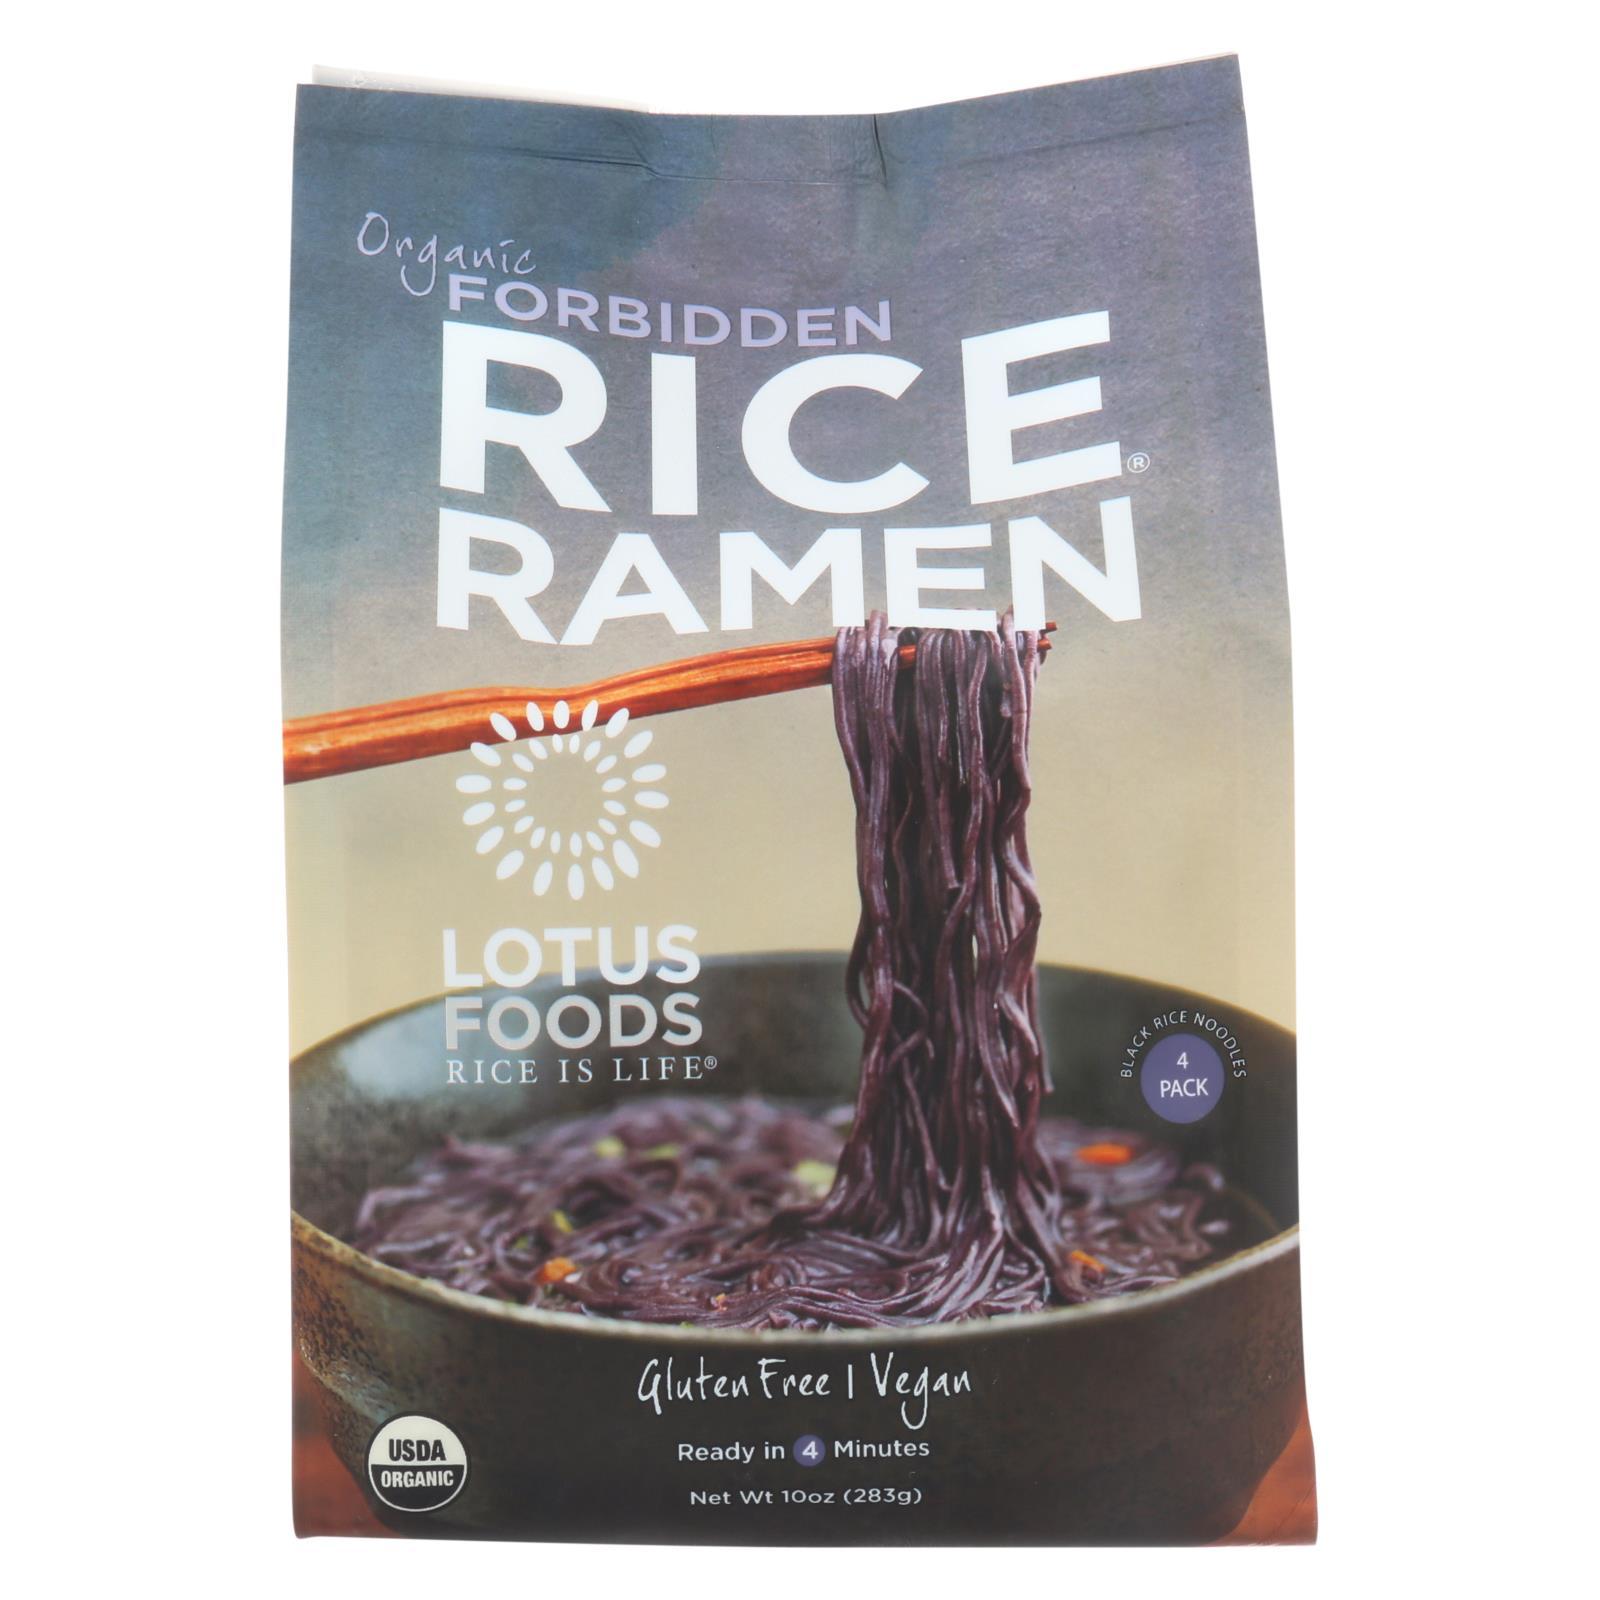 Lotus Foods Forbidden Rice Ramen 283g